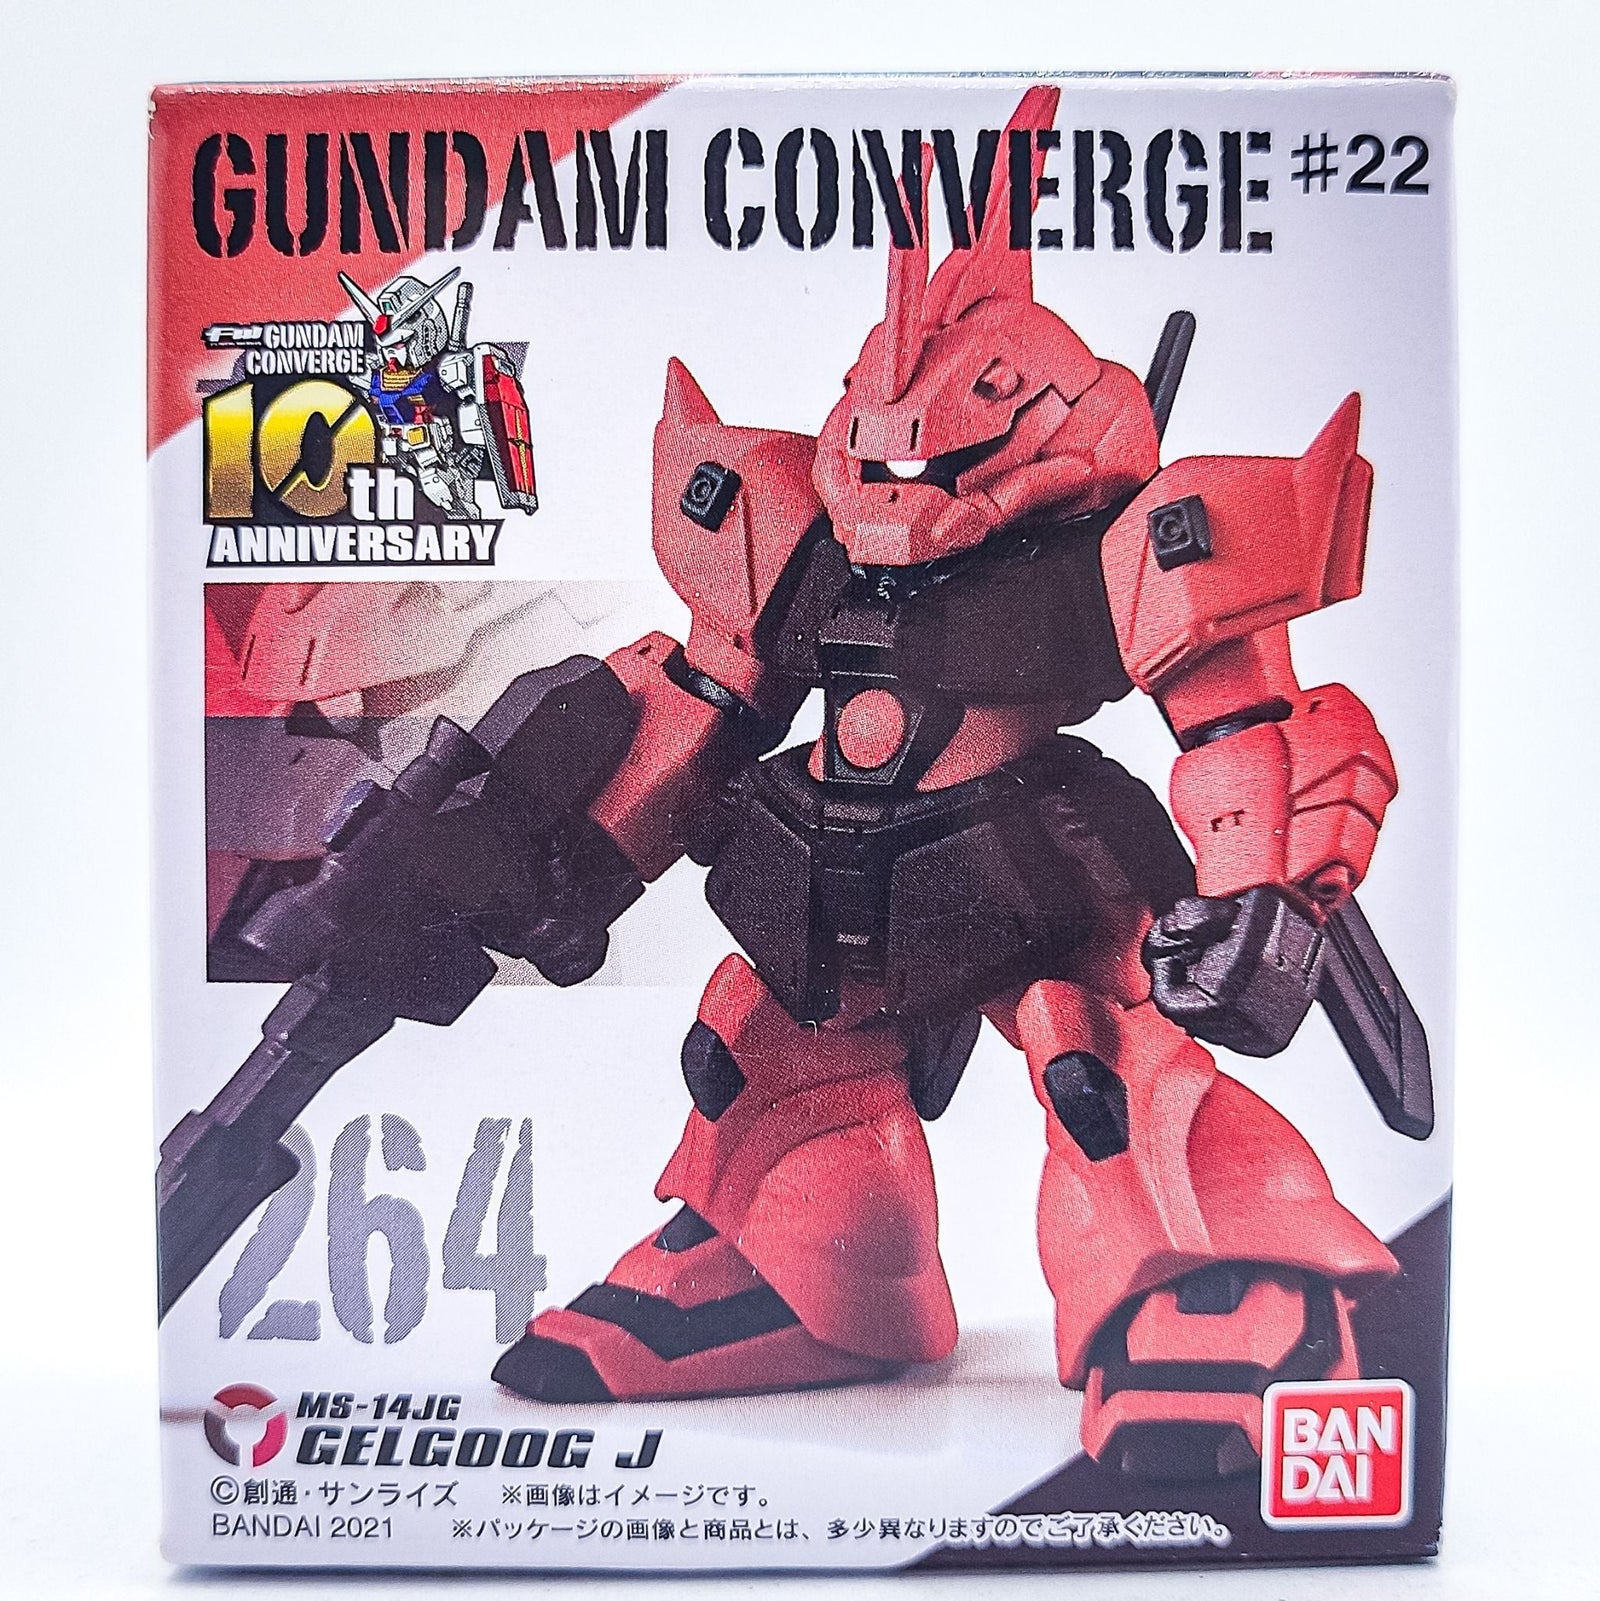 Gundam Converge #264 Gelgoog Jager by Bandai - 1